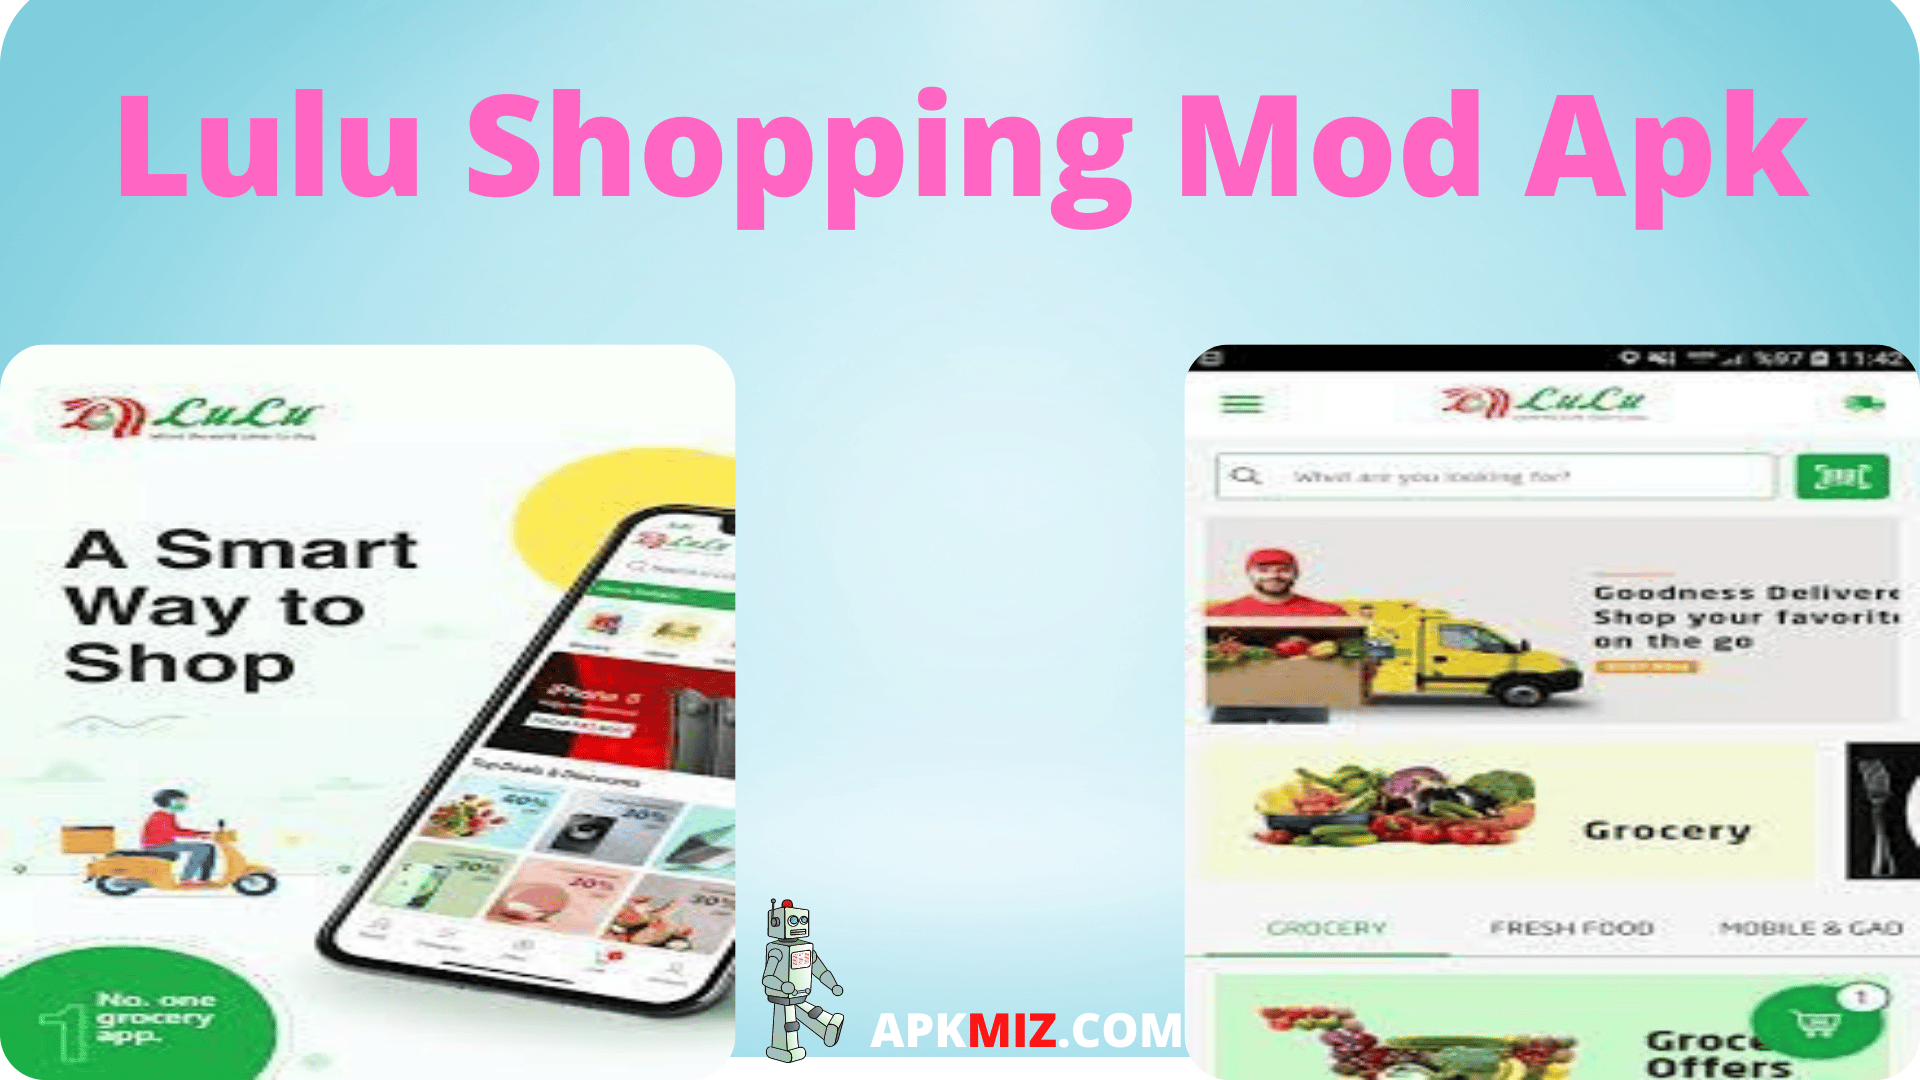 Lulu Shopping Mod Apk